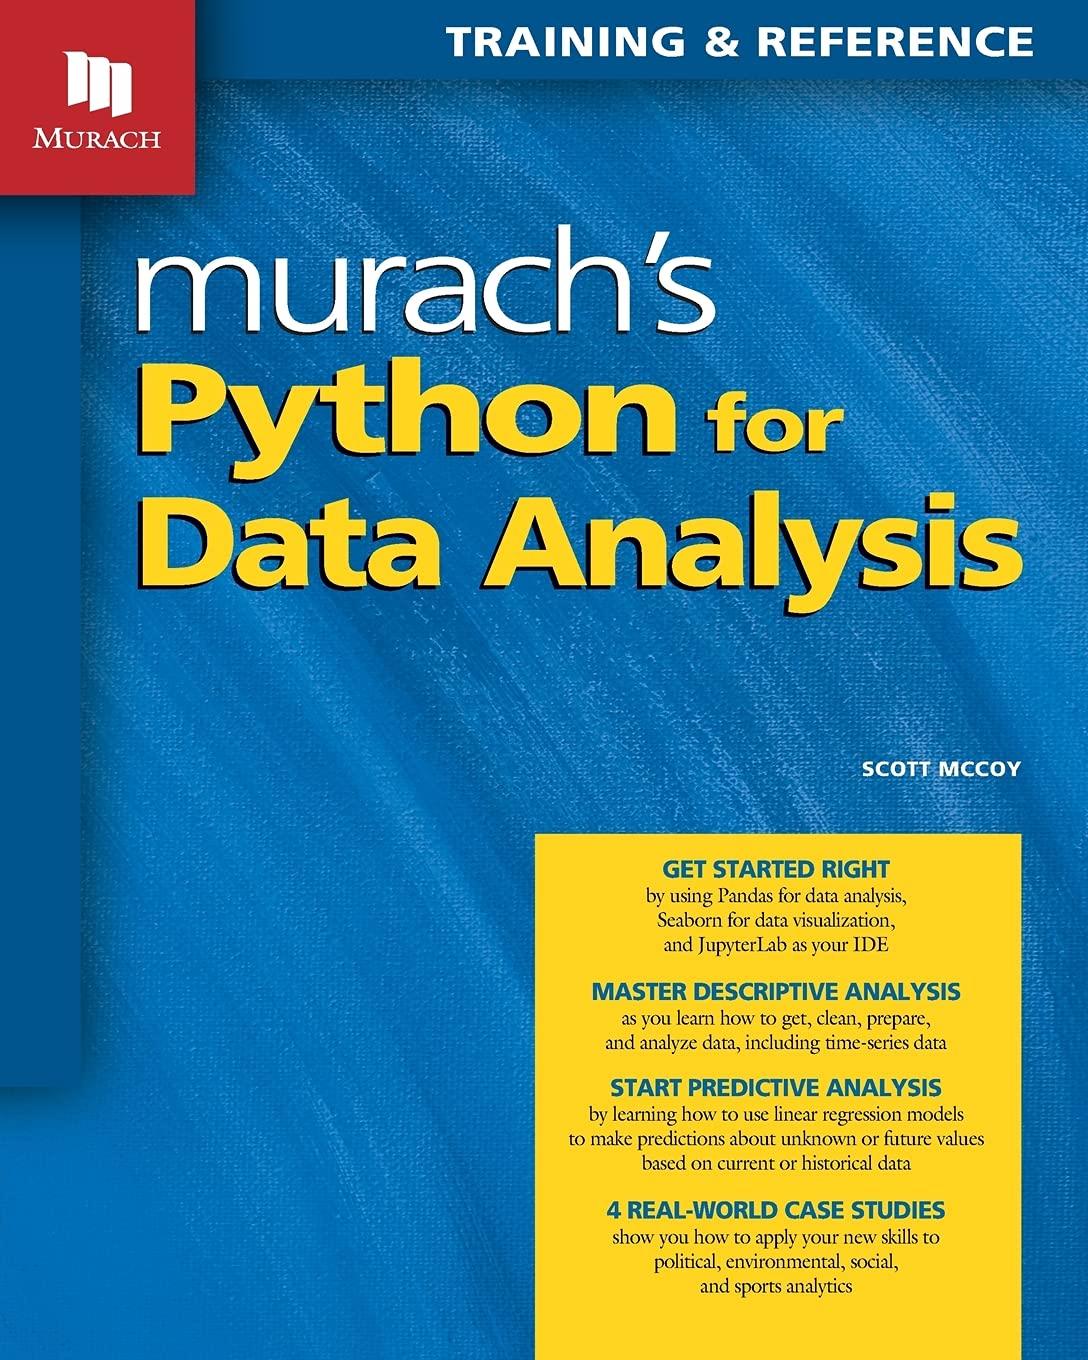 murach's python for data analysis training  reference 1st edition scott mccoy 1943872767, 978-1943872763